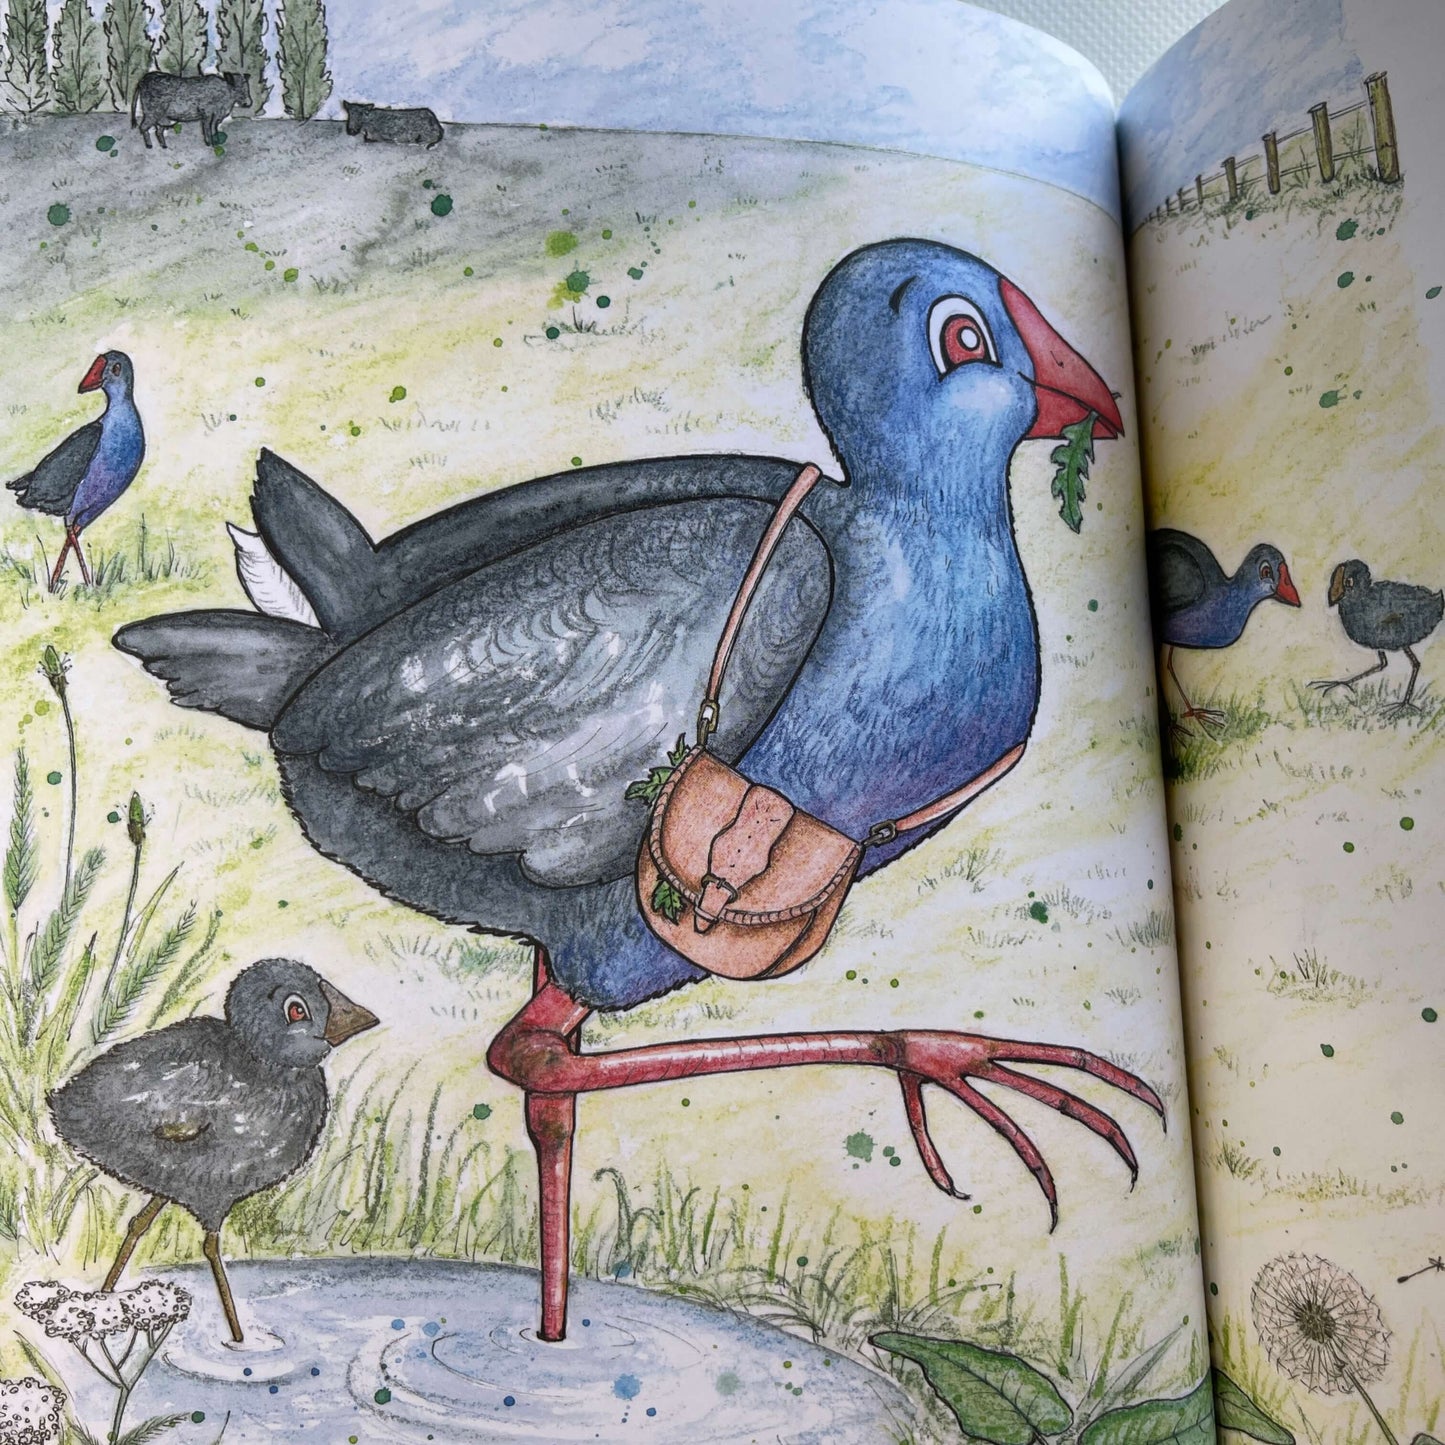 Illustrations from Childrens book Kererus BBQ.